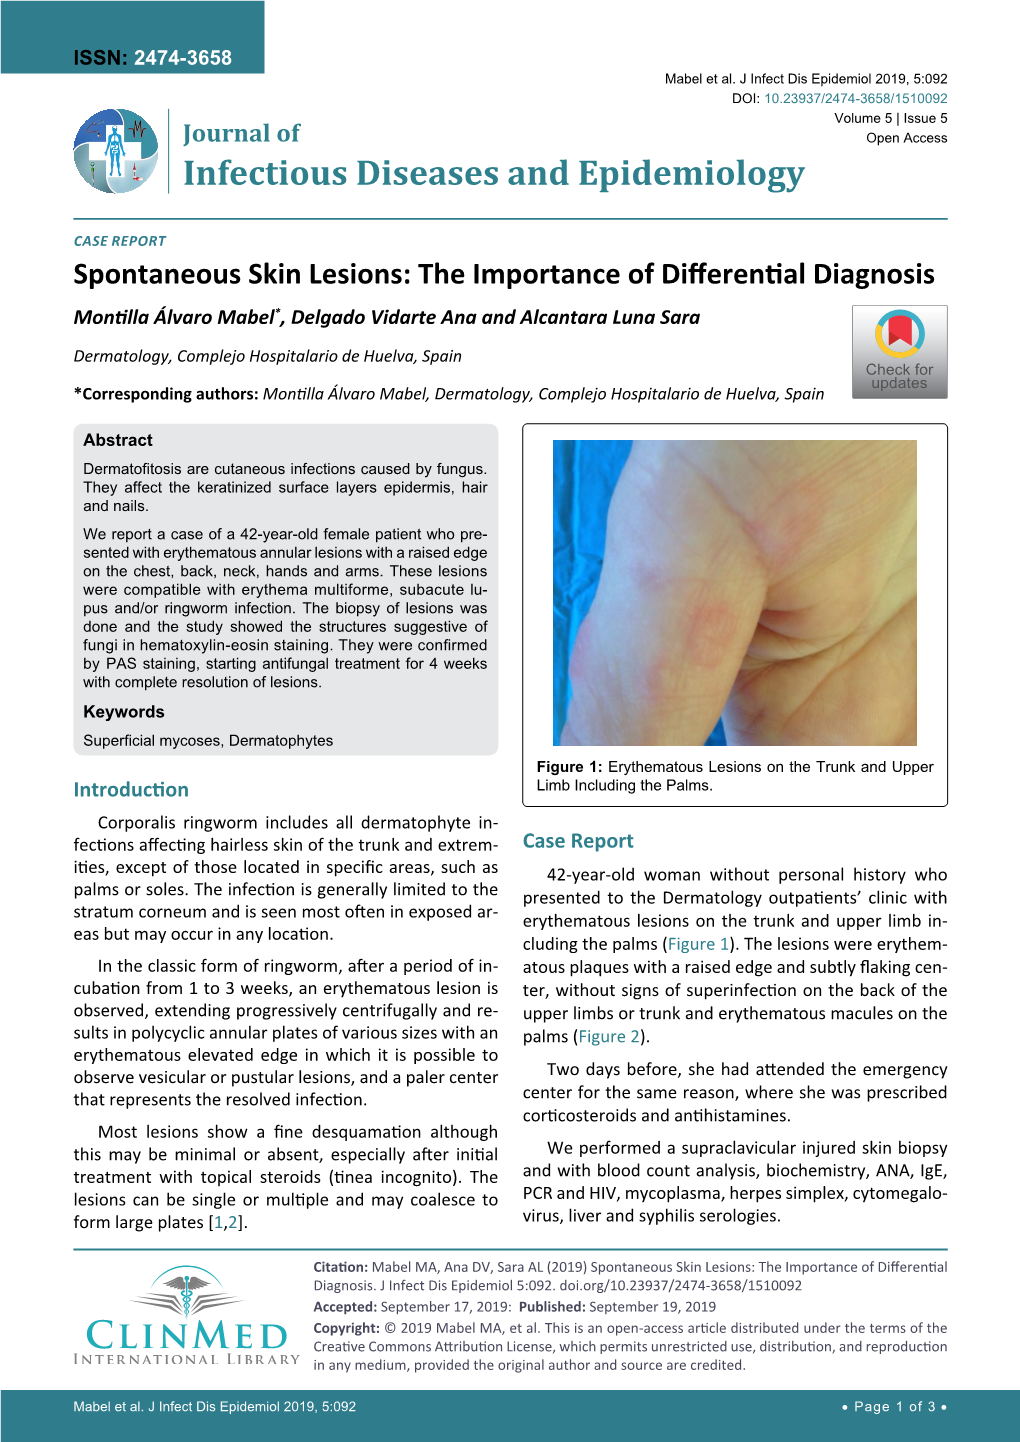 Spontaneous Skin Lesions: the Importance of Differential Diagnosis Montilla Álvaro Mabel*, Delgado Vidarte Ana and Alcantara Luna Sara